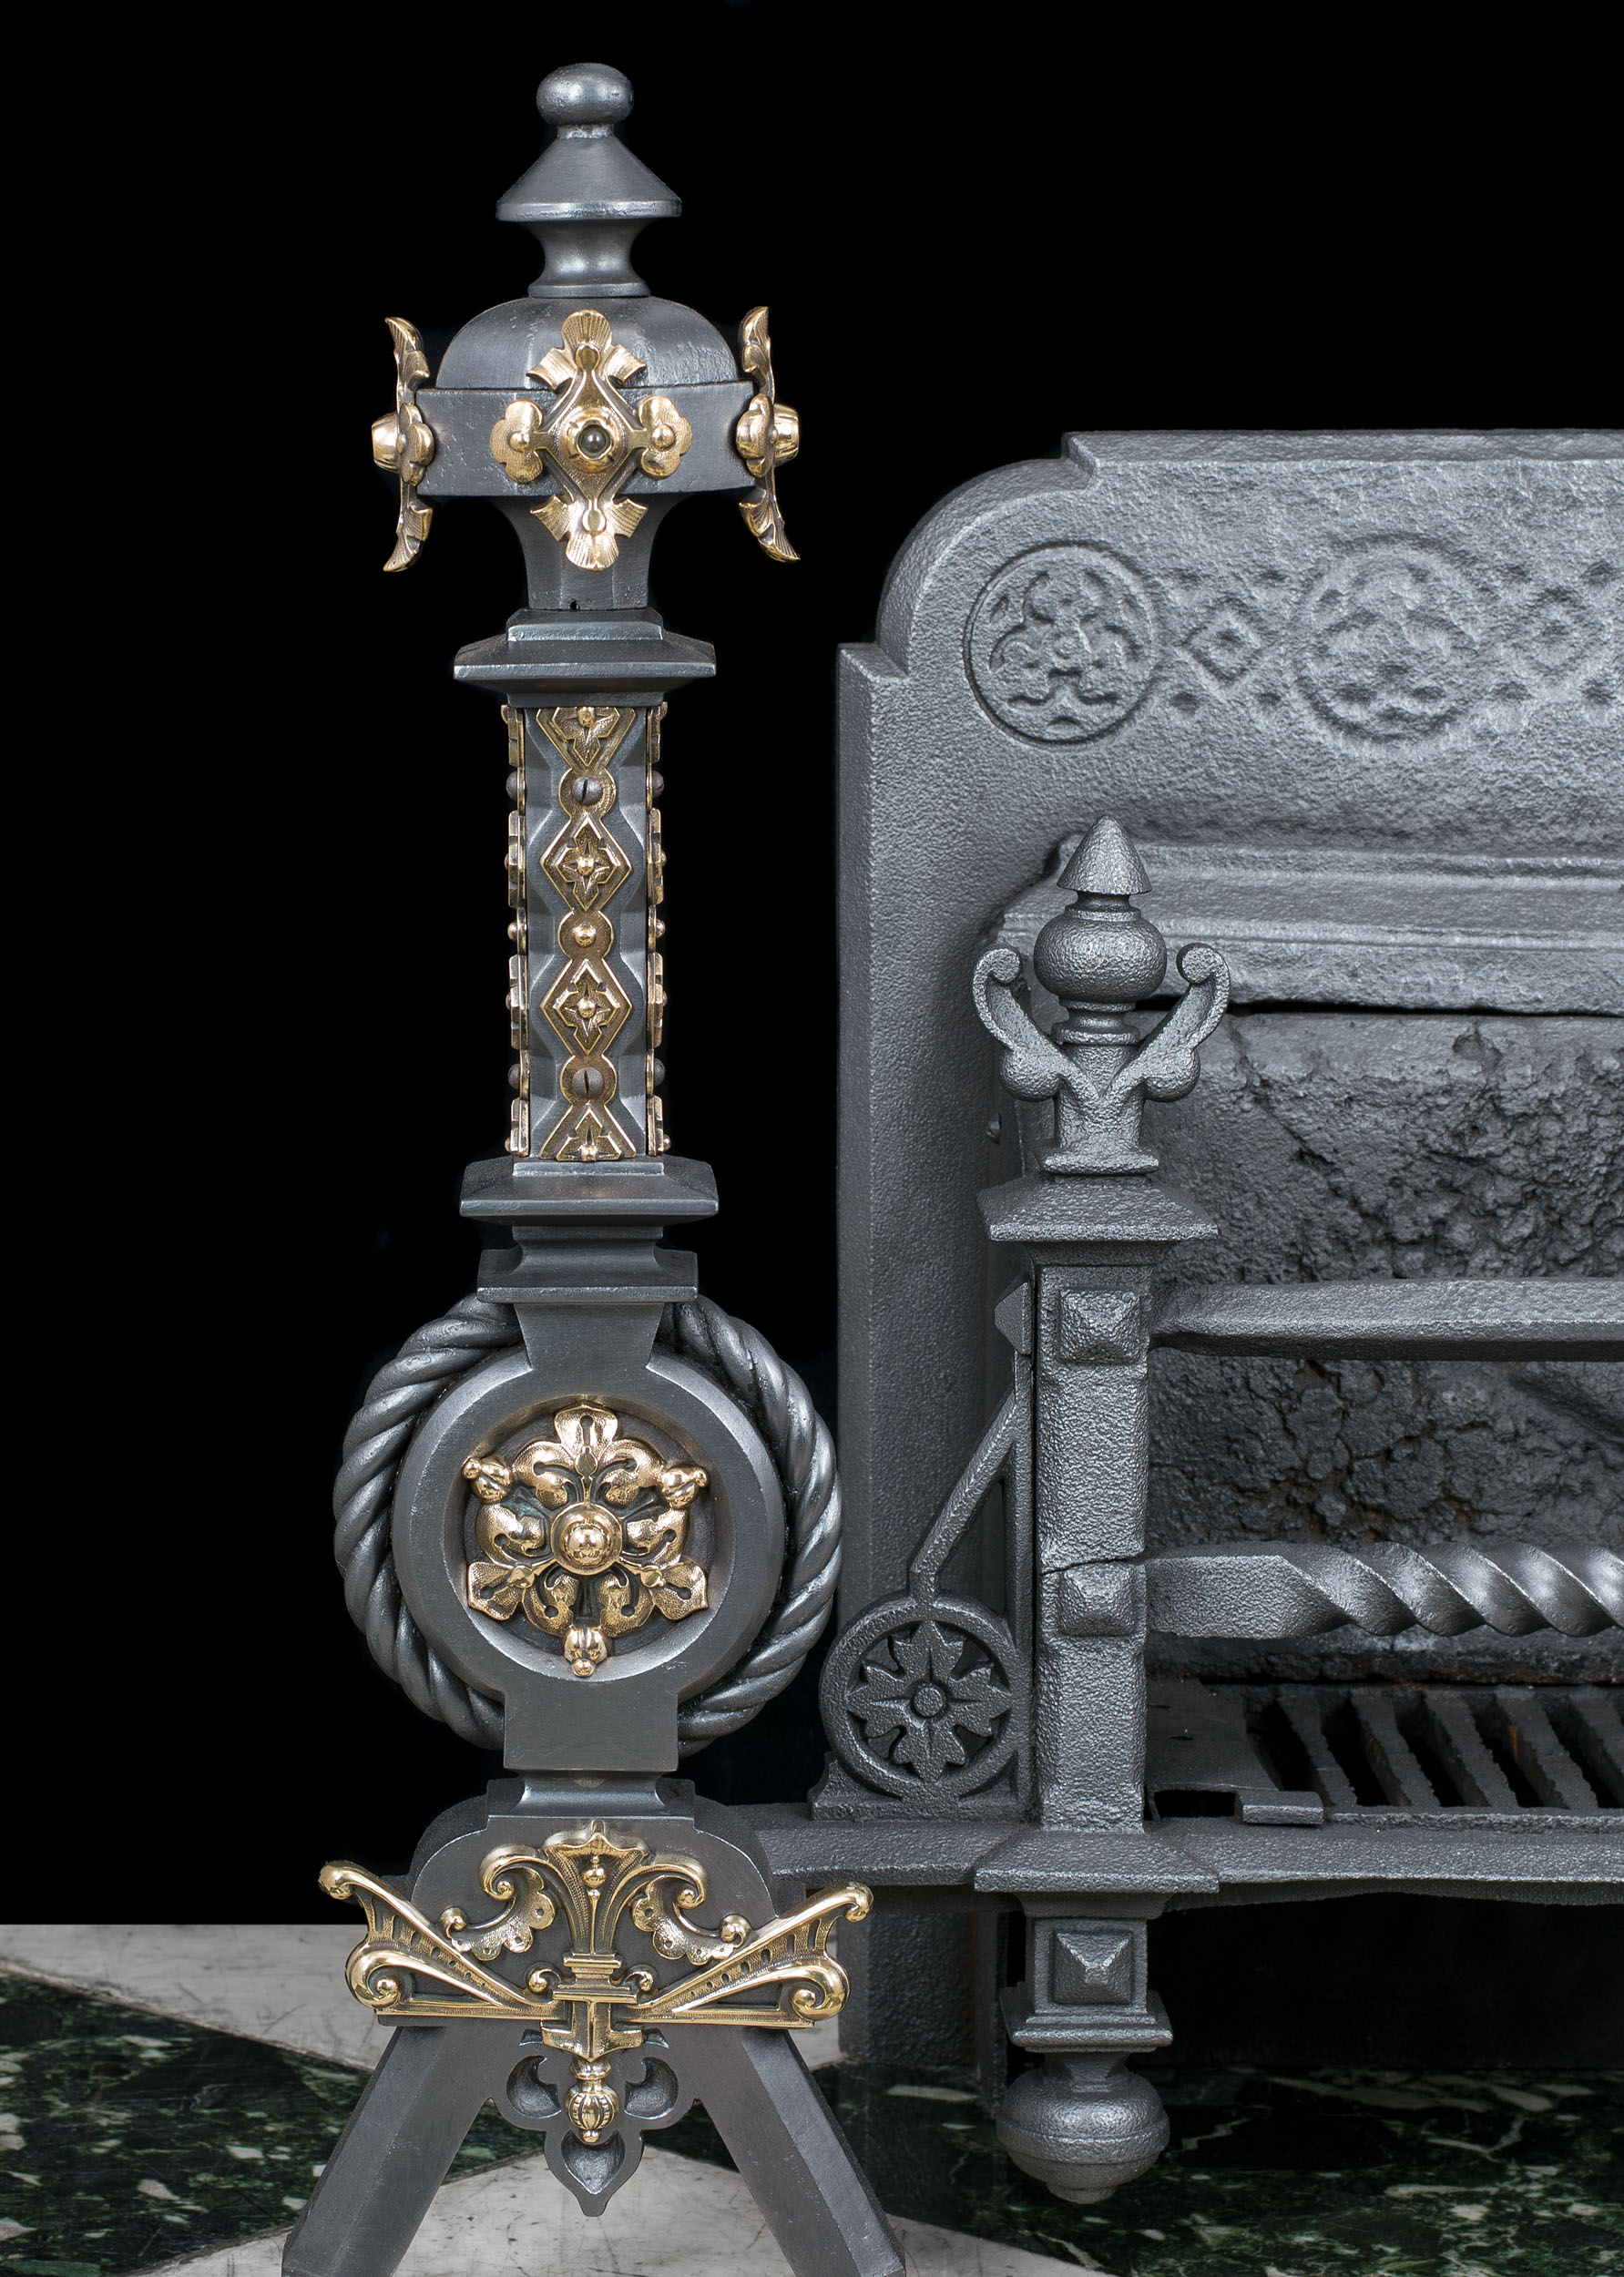 A Large Gothic Revival Antique Fire Grate